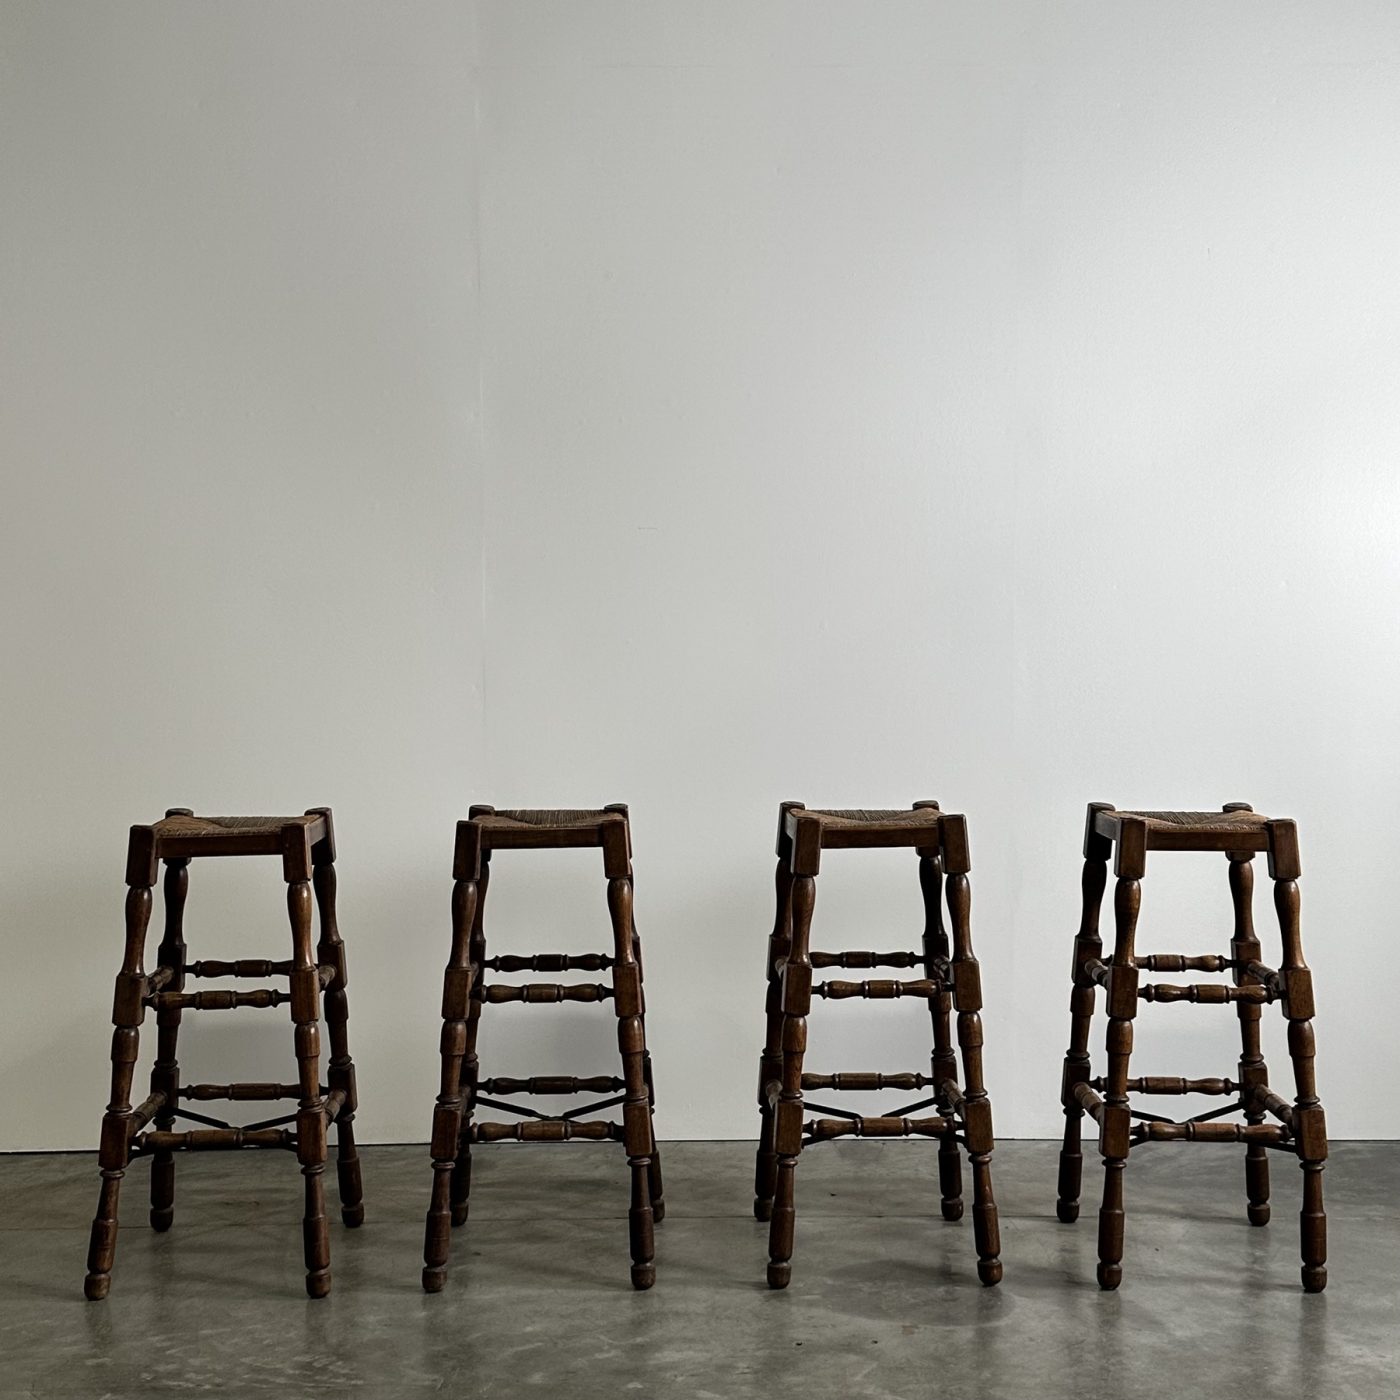 objet-vagabond-high-stools0008